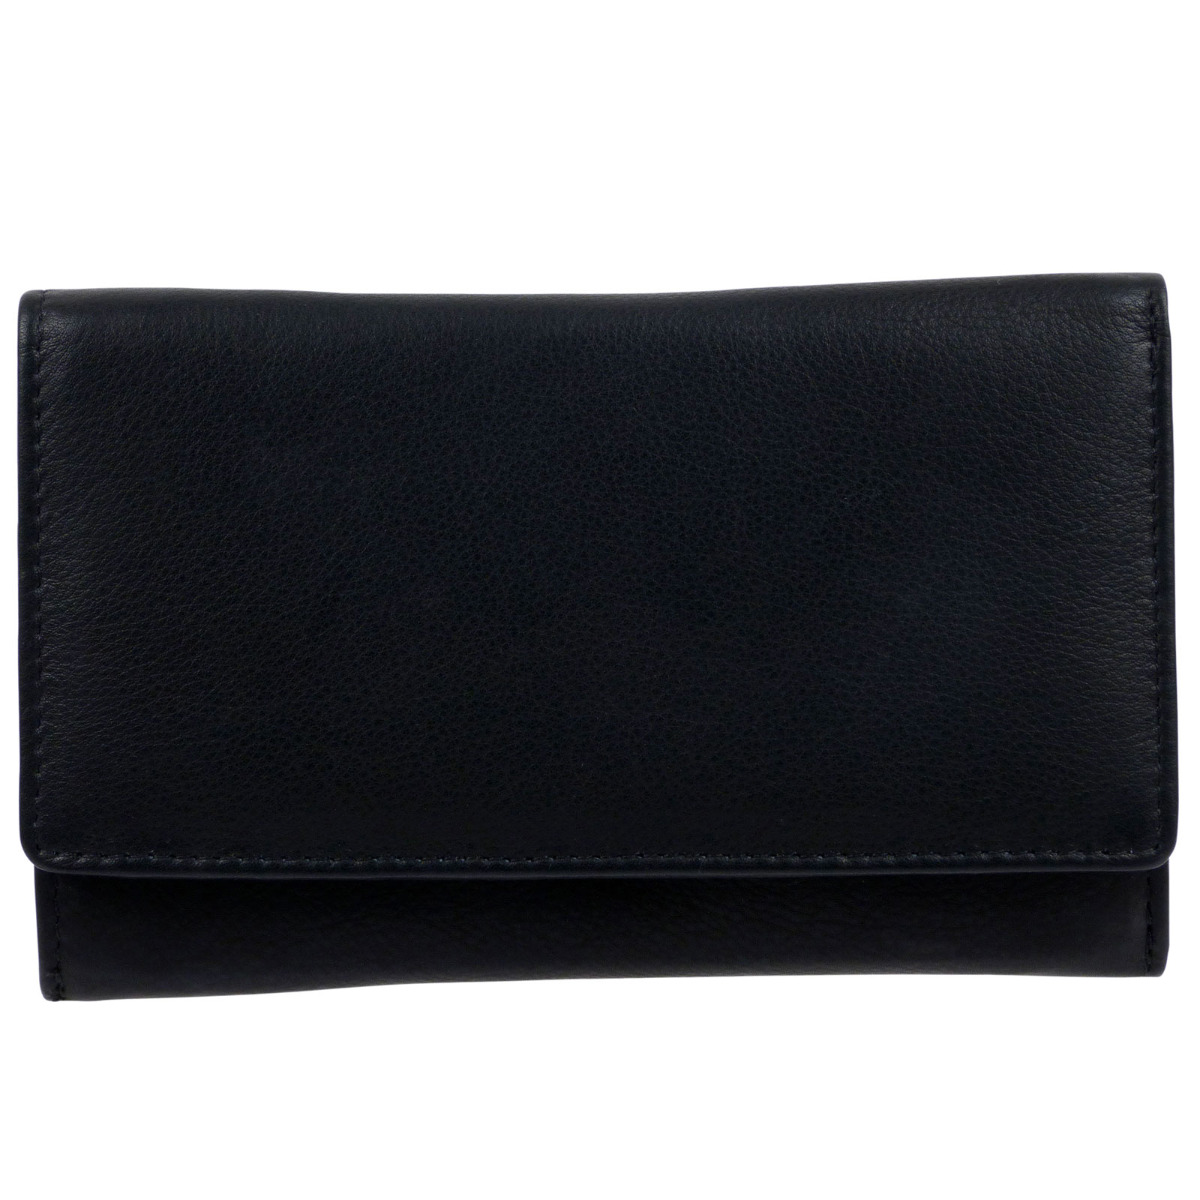 Dominique Ladies Soft Leather Purse/Wallet Flap Over | eBay